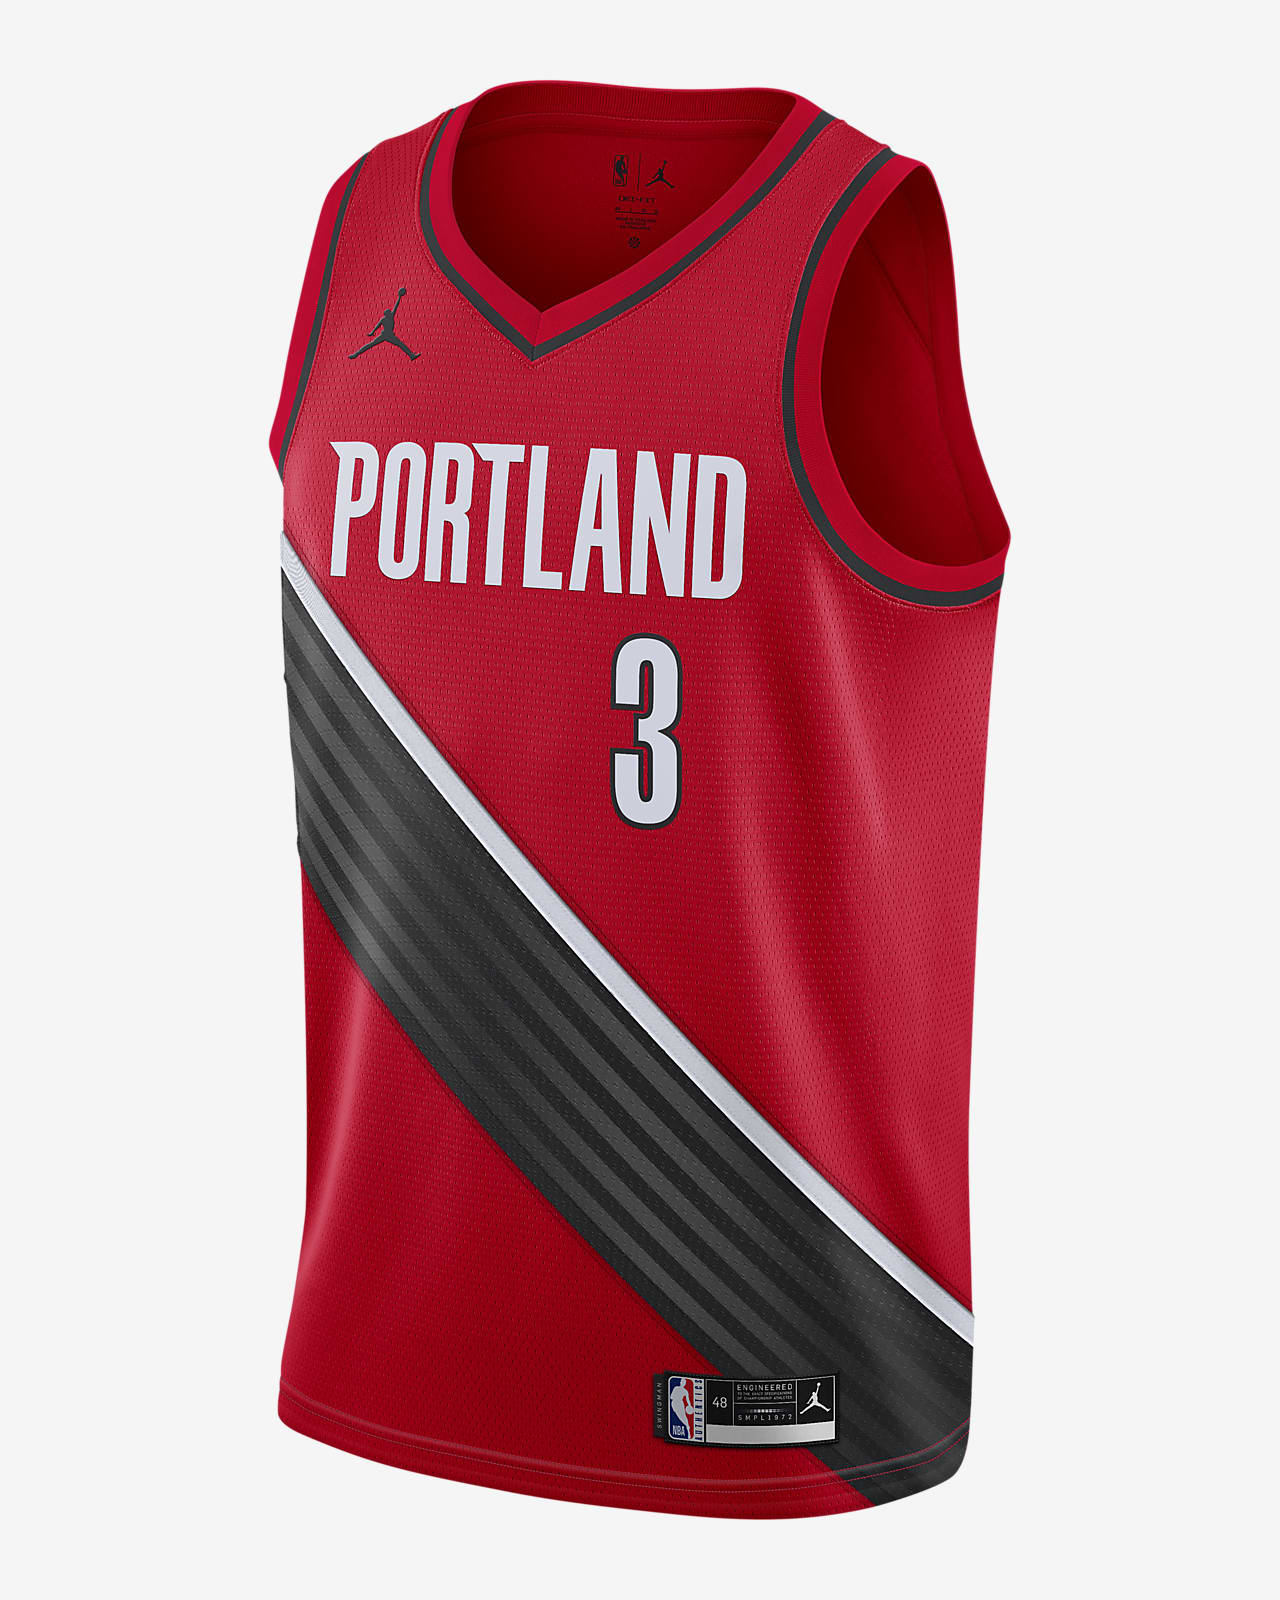 Trail Blazers unveil Oregon-themed City Edition uniform